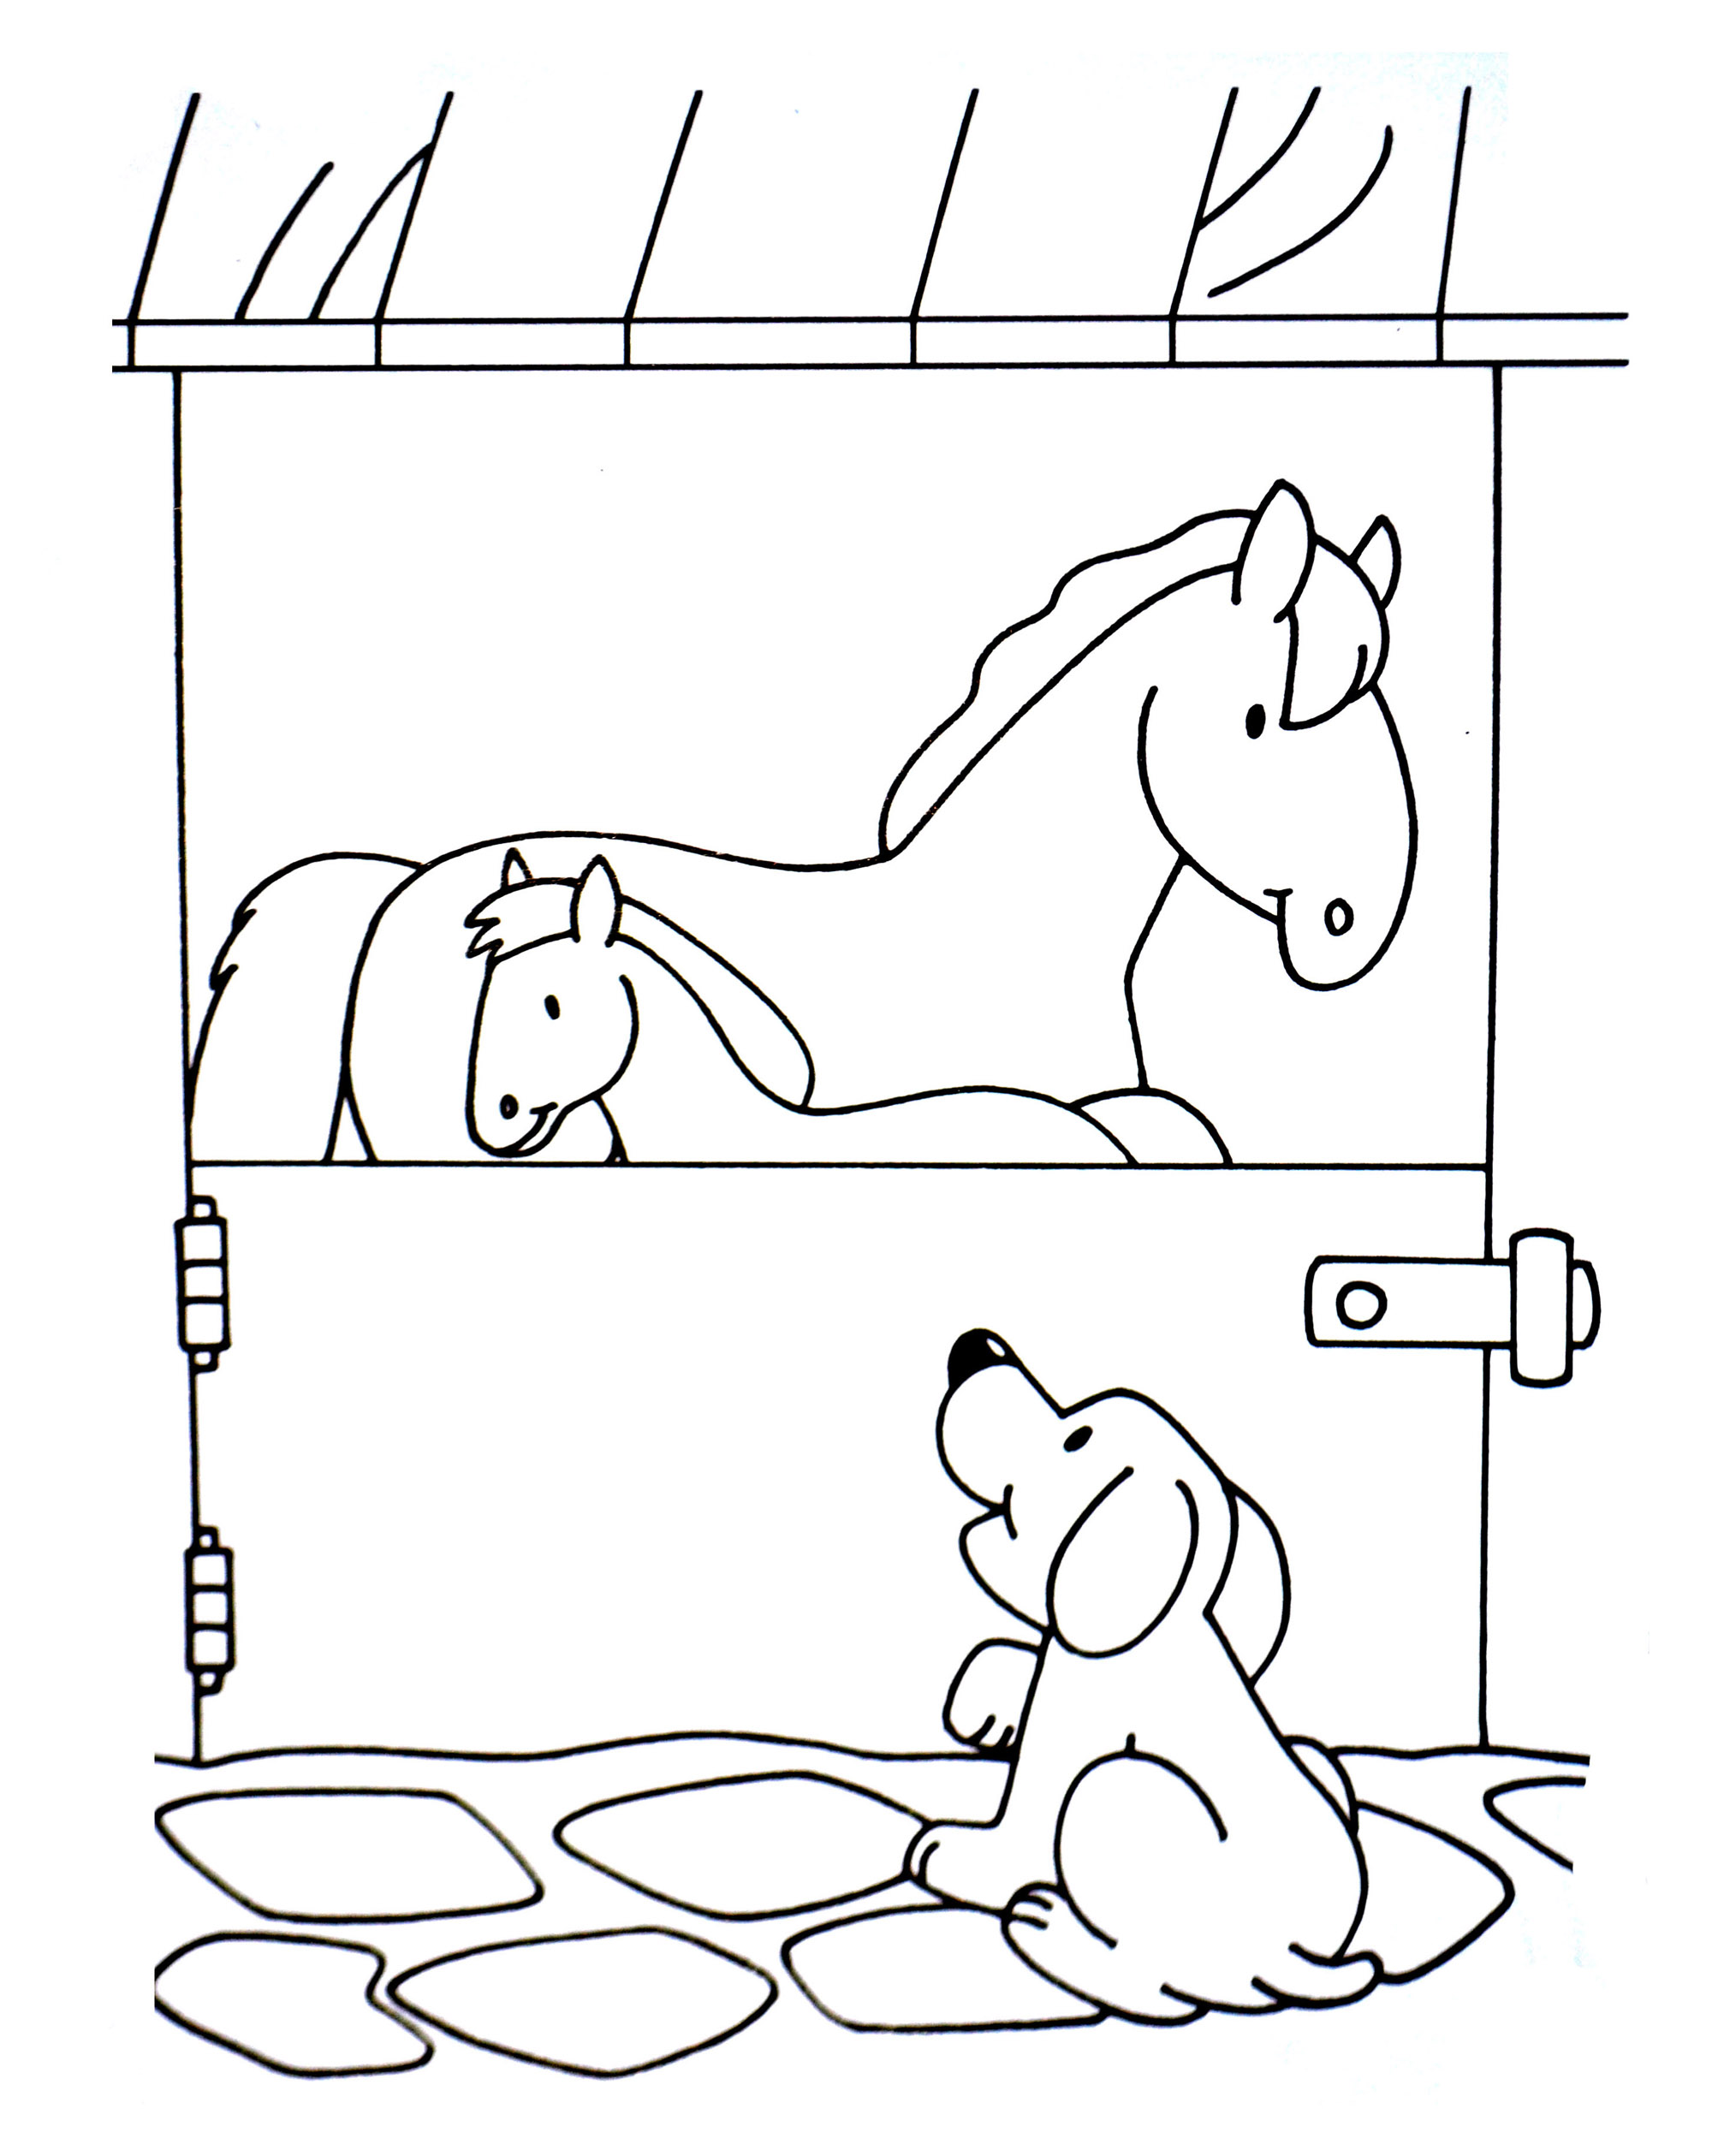 Dog and horses